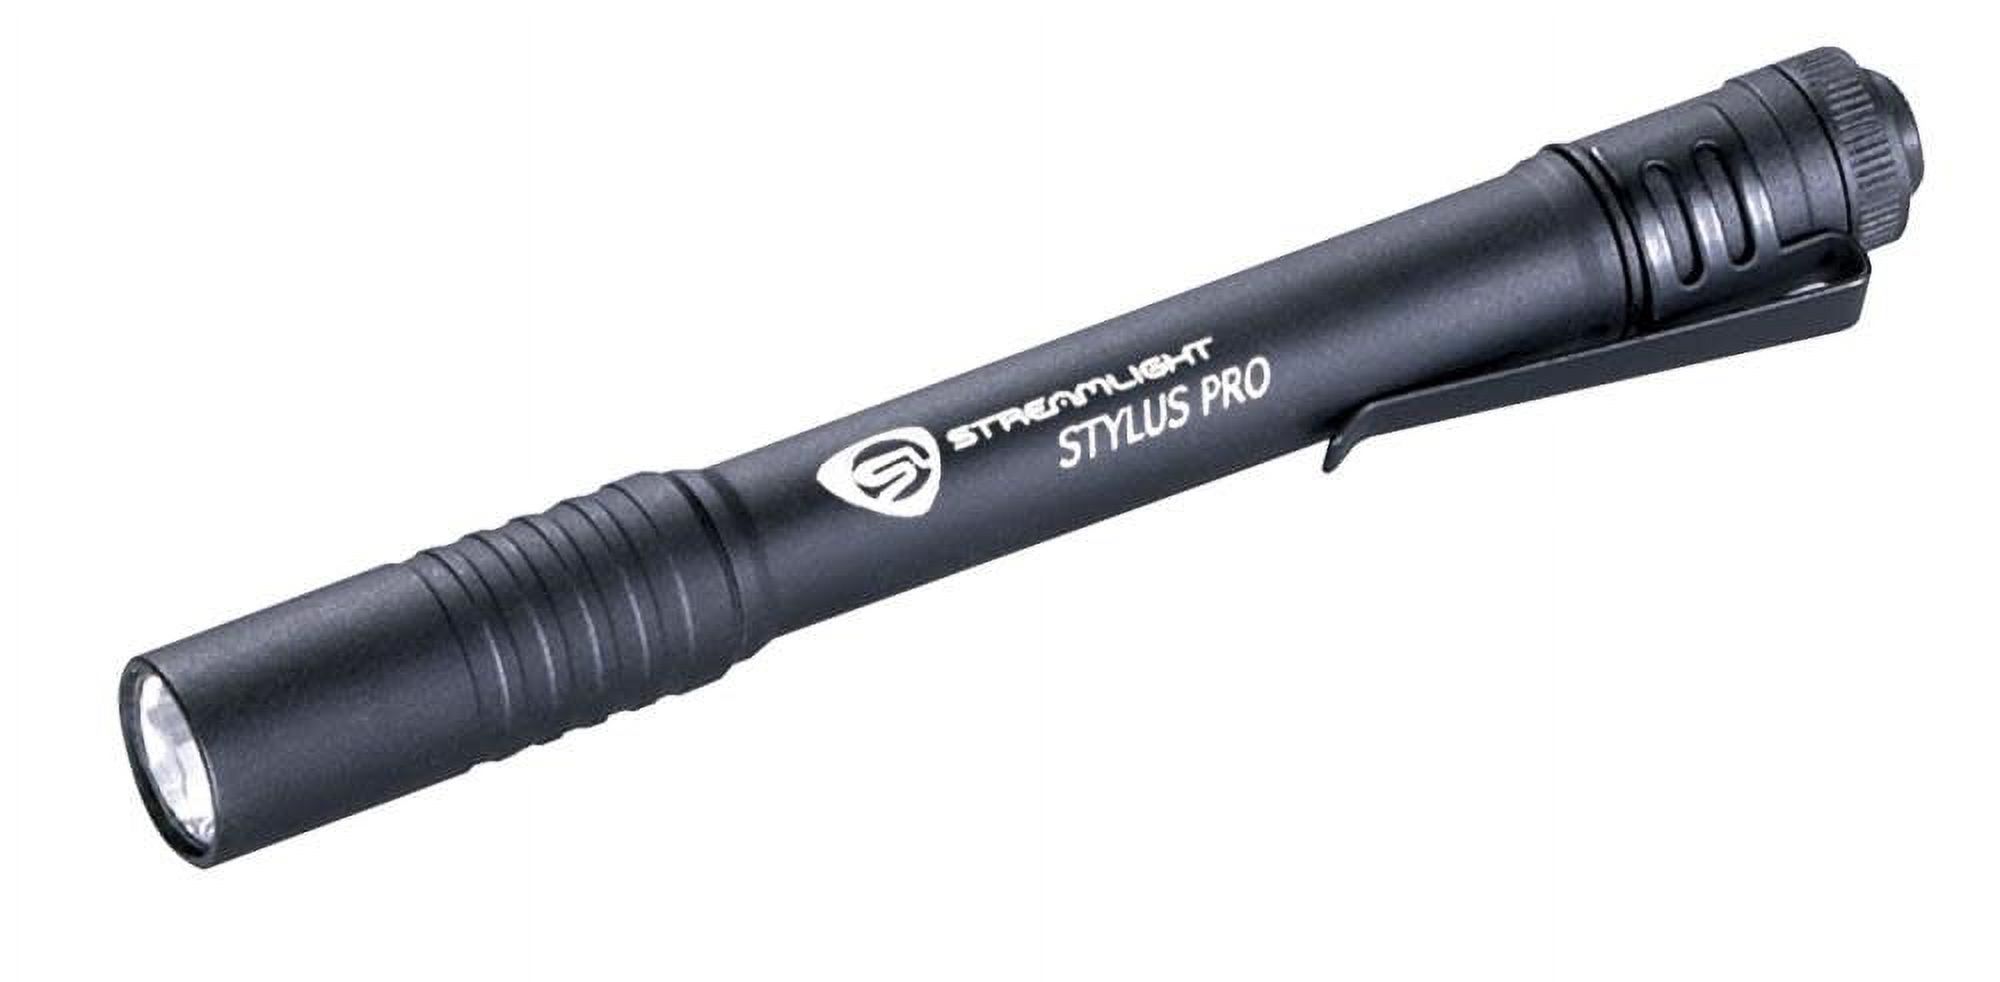 Streamlight Stylus Pro Penlight - image 1 of 7